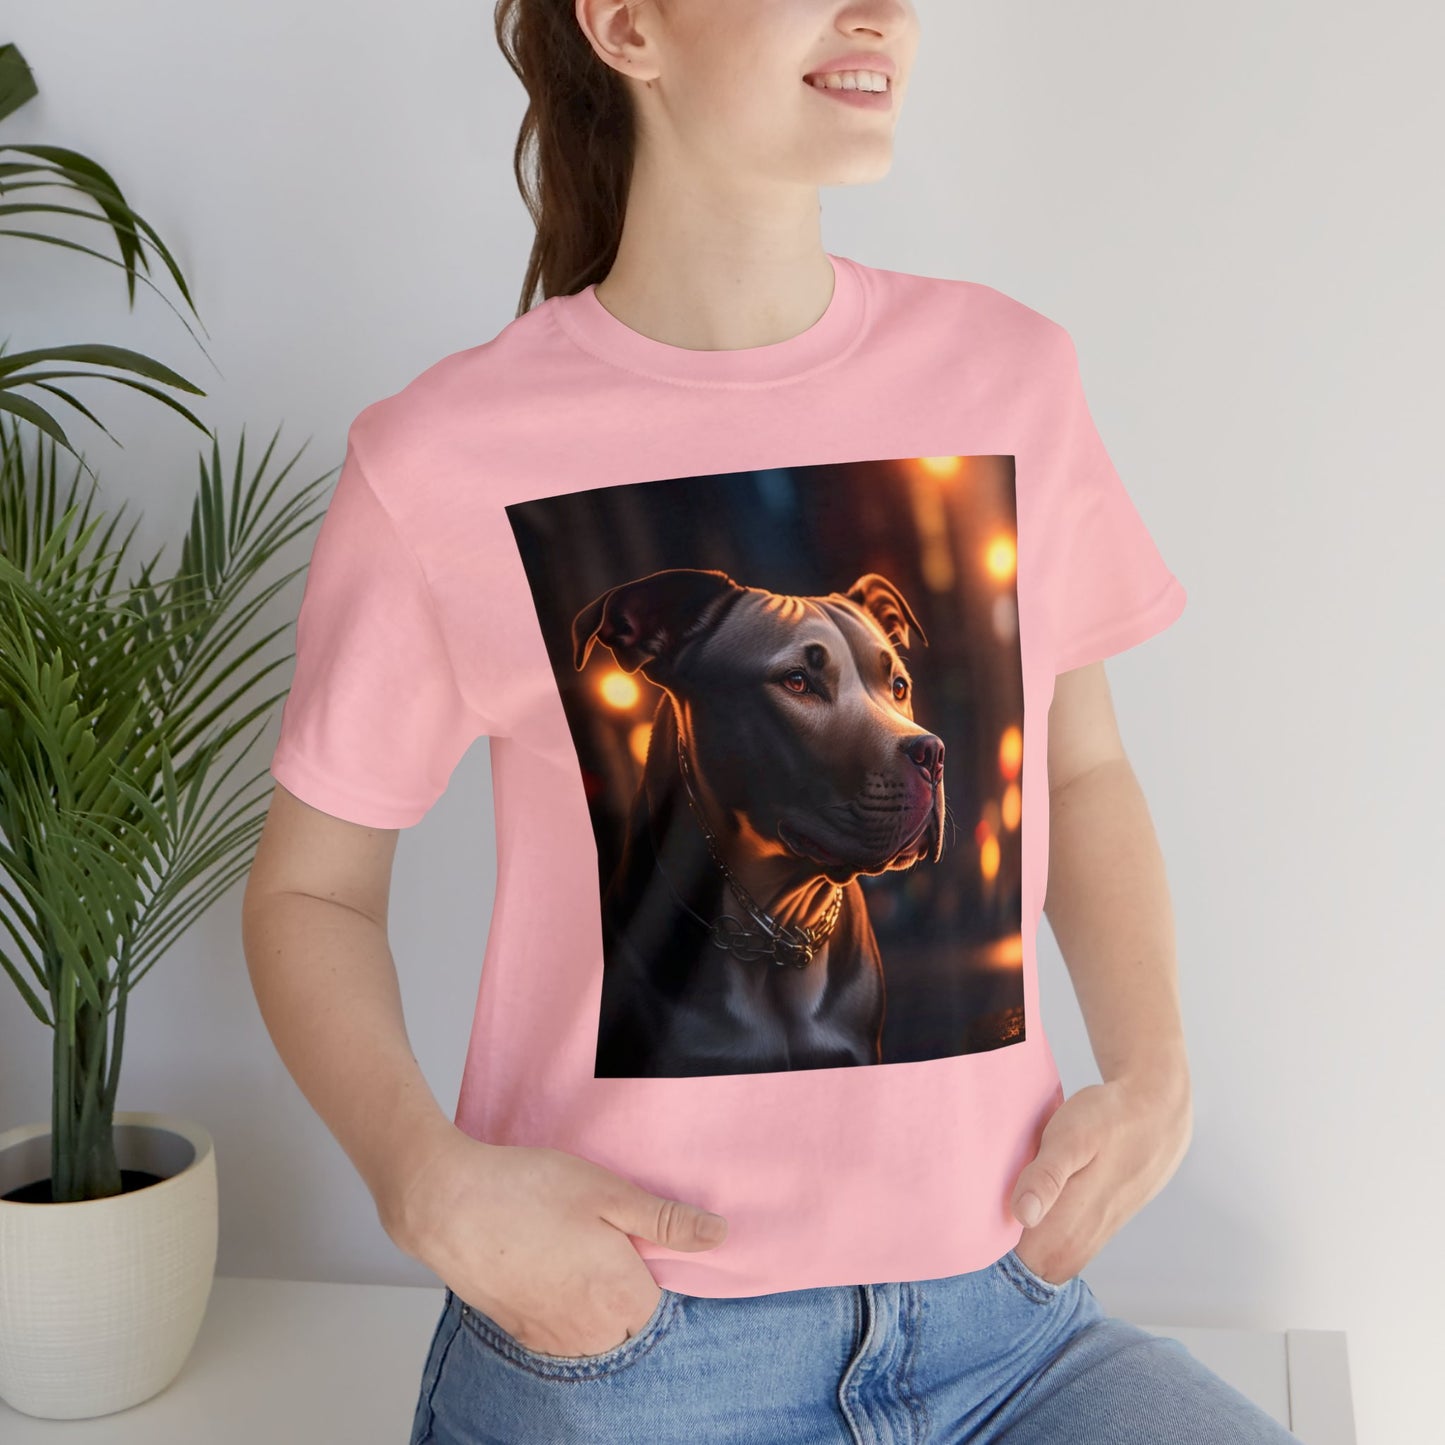 Man's Best Friend | Pitbull | HD | Dog Lover Gift | Pittie | Unisex | Men's | Women's | Tee | T-Shirt